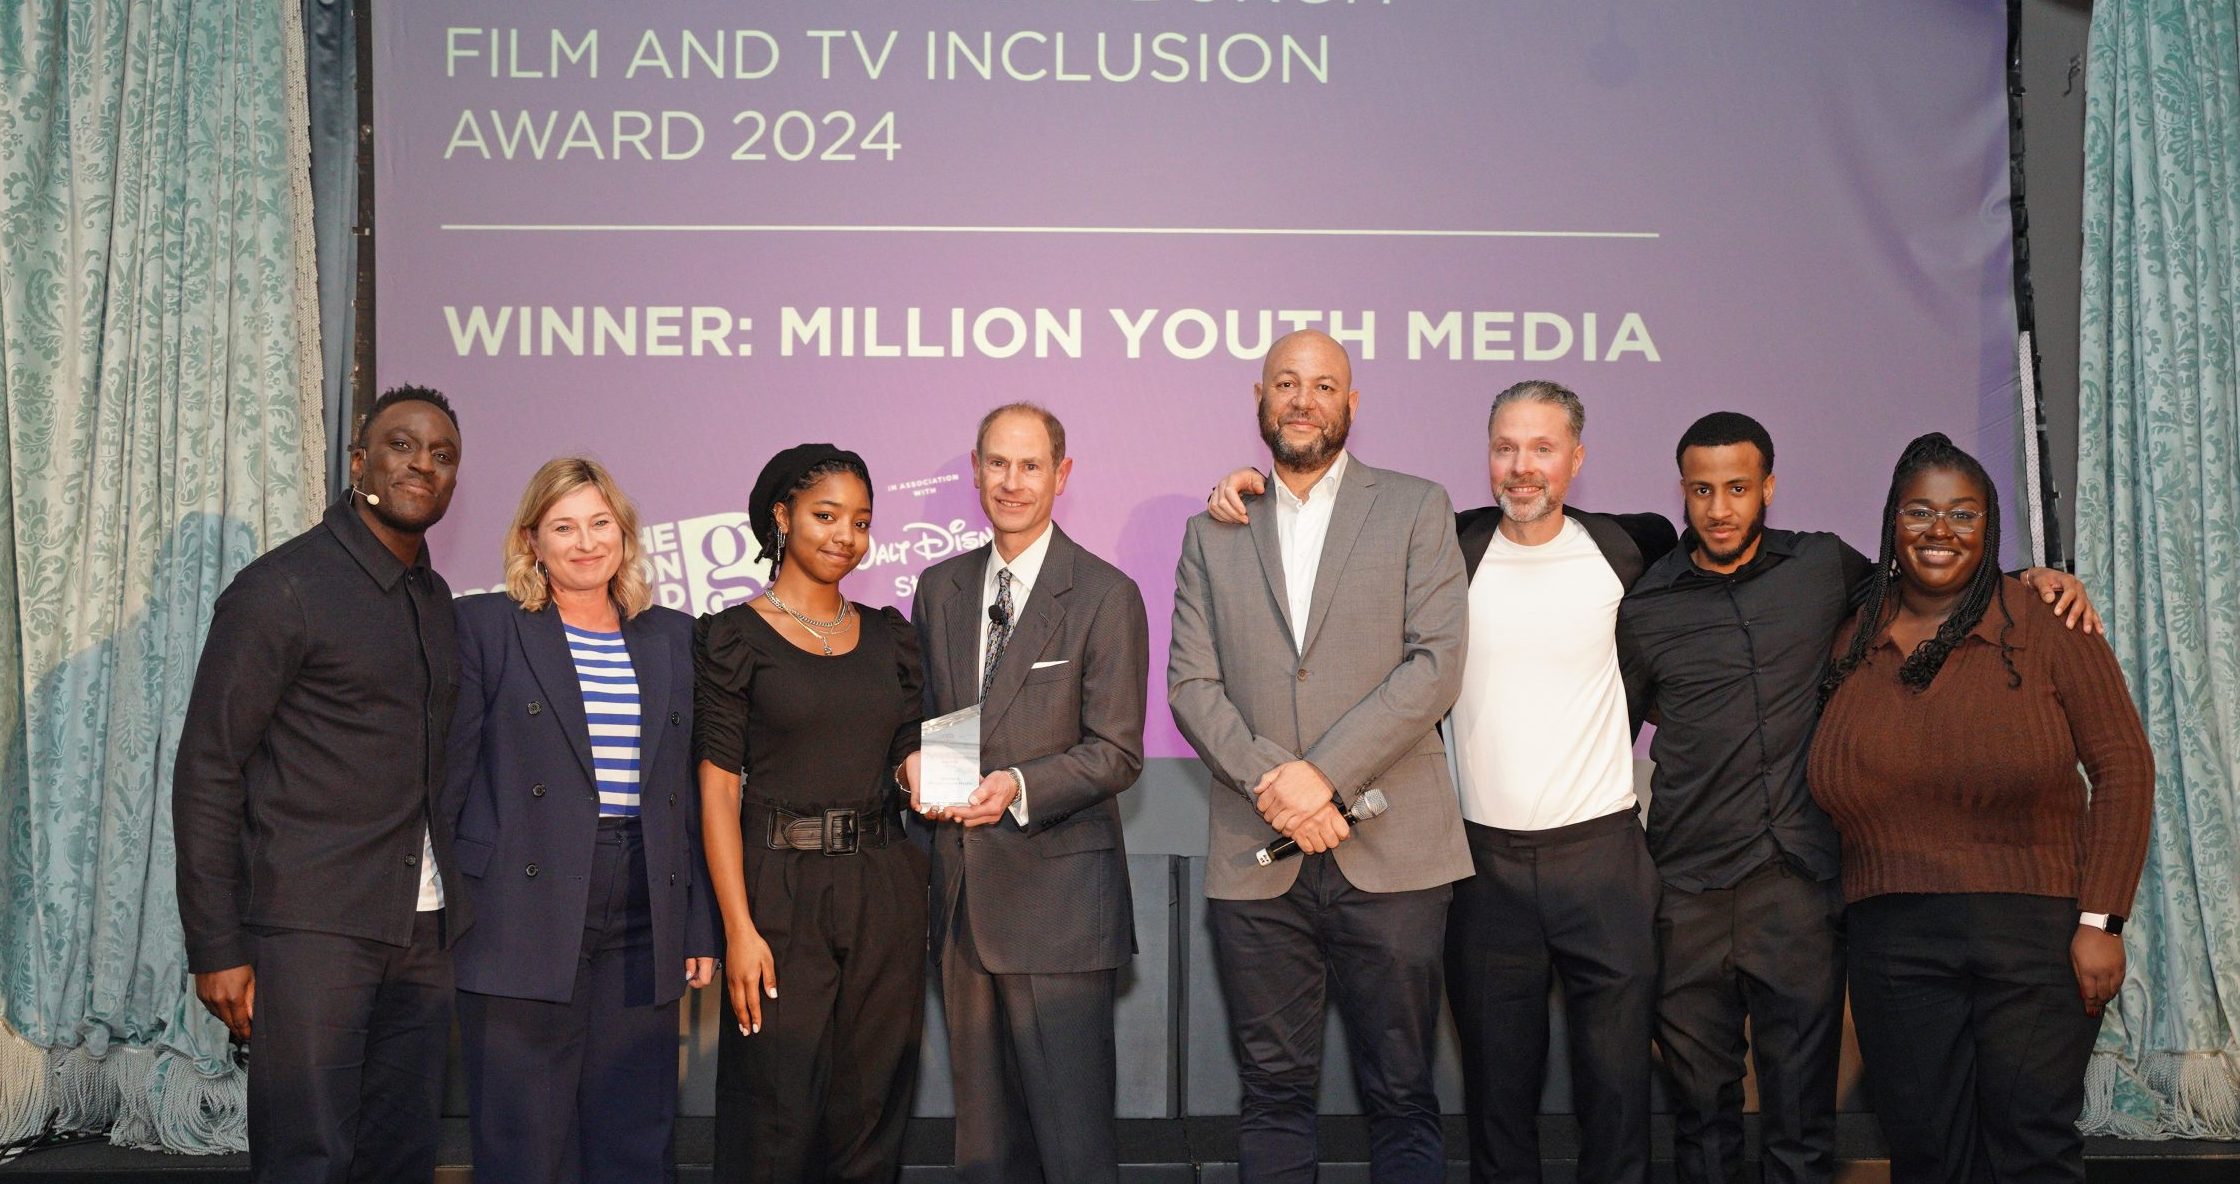 Million Youth Media wins The Duke of Edinburgh Film & TV Inclusion Award 2024 at PGGB Talent Showcase in association with Walt Disney Studios 